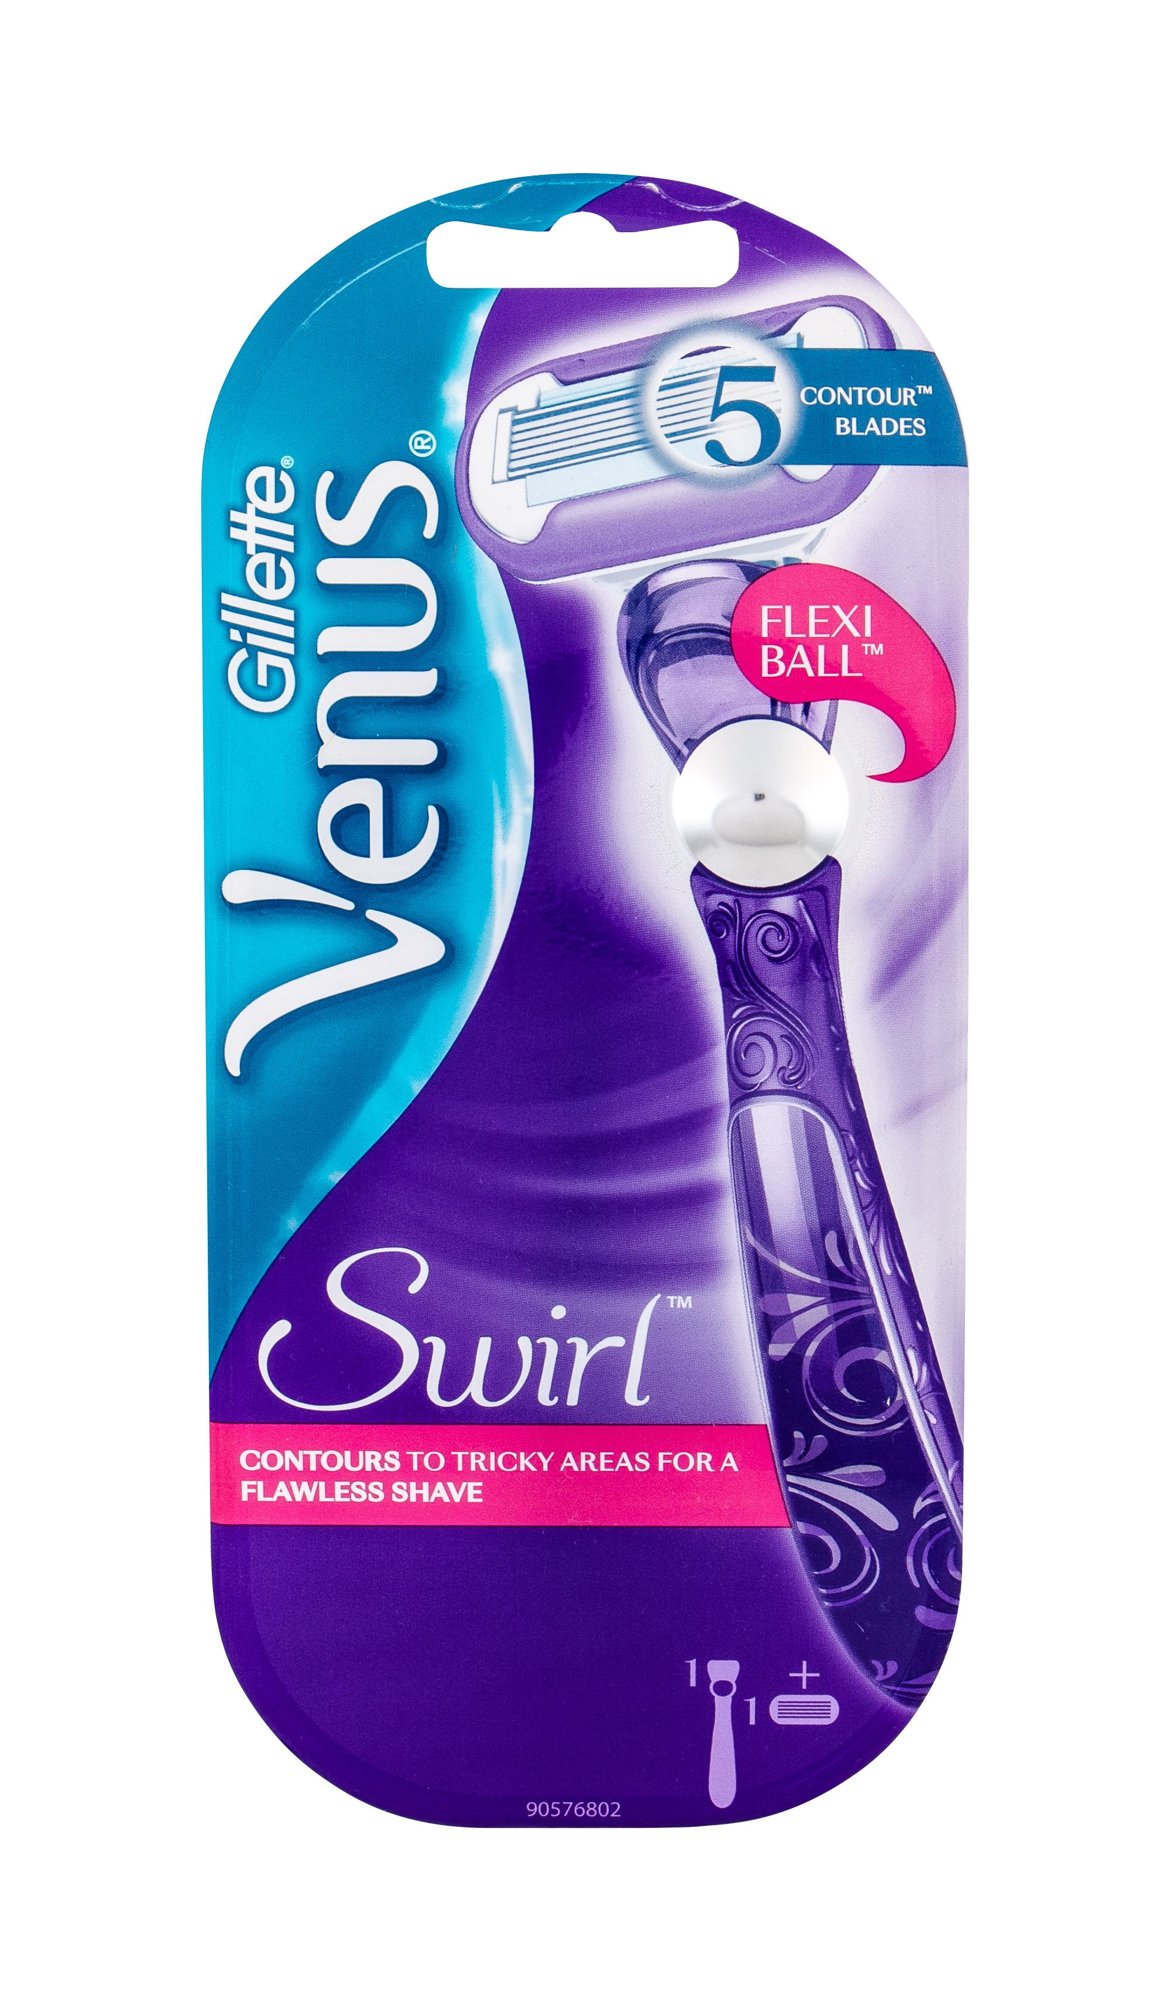 Gillette Venus Swirl skustuvas